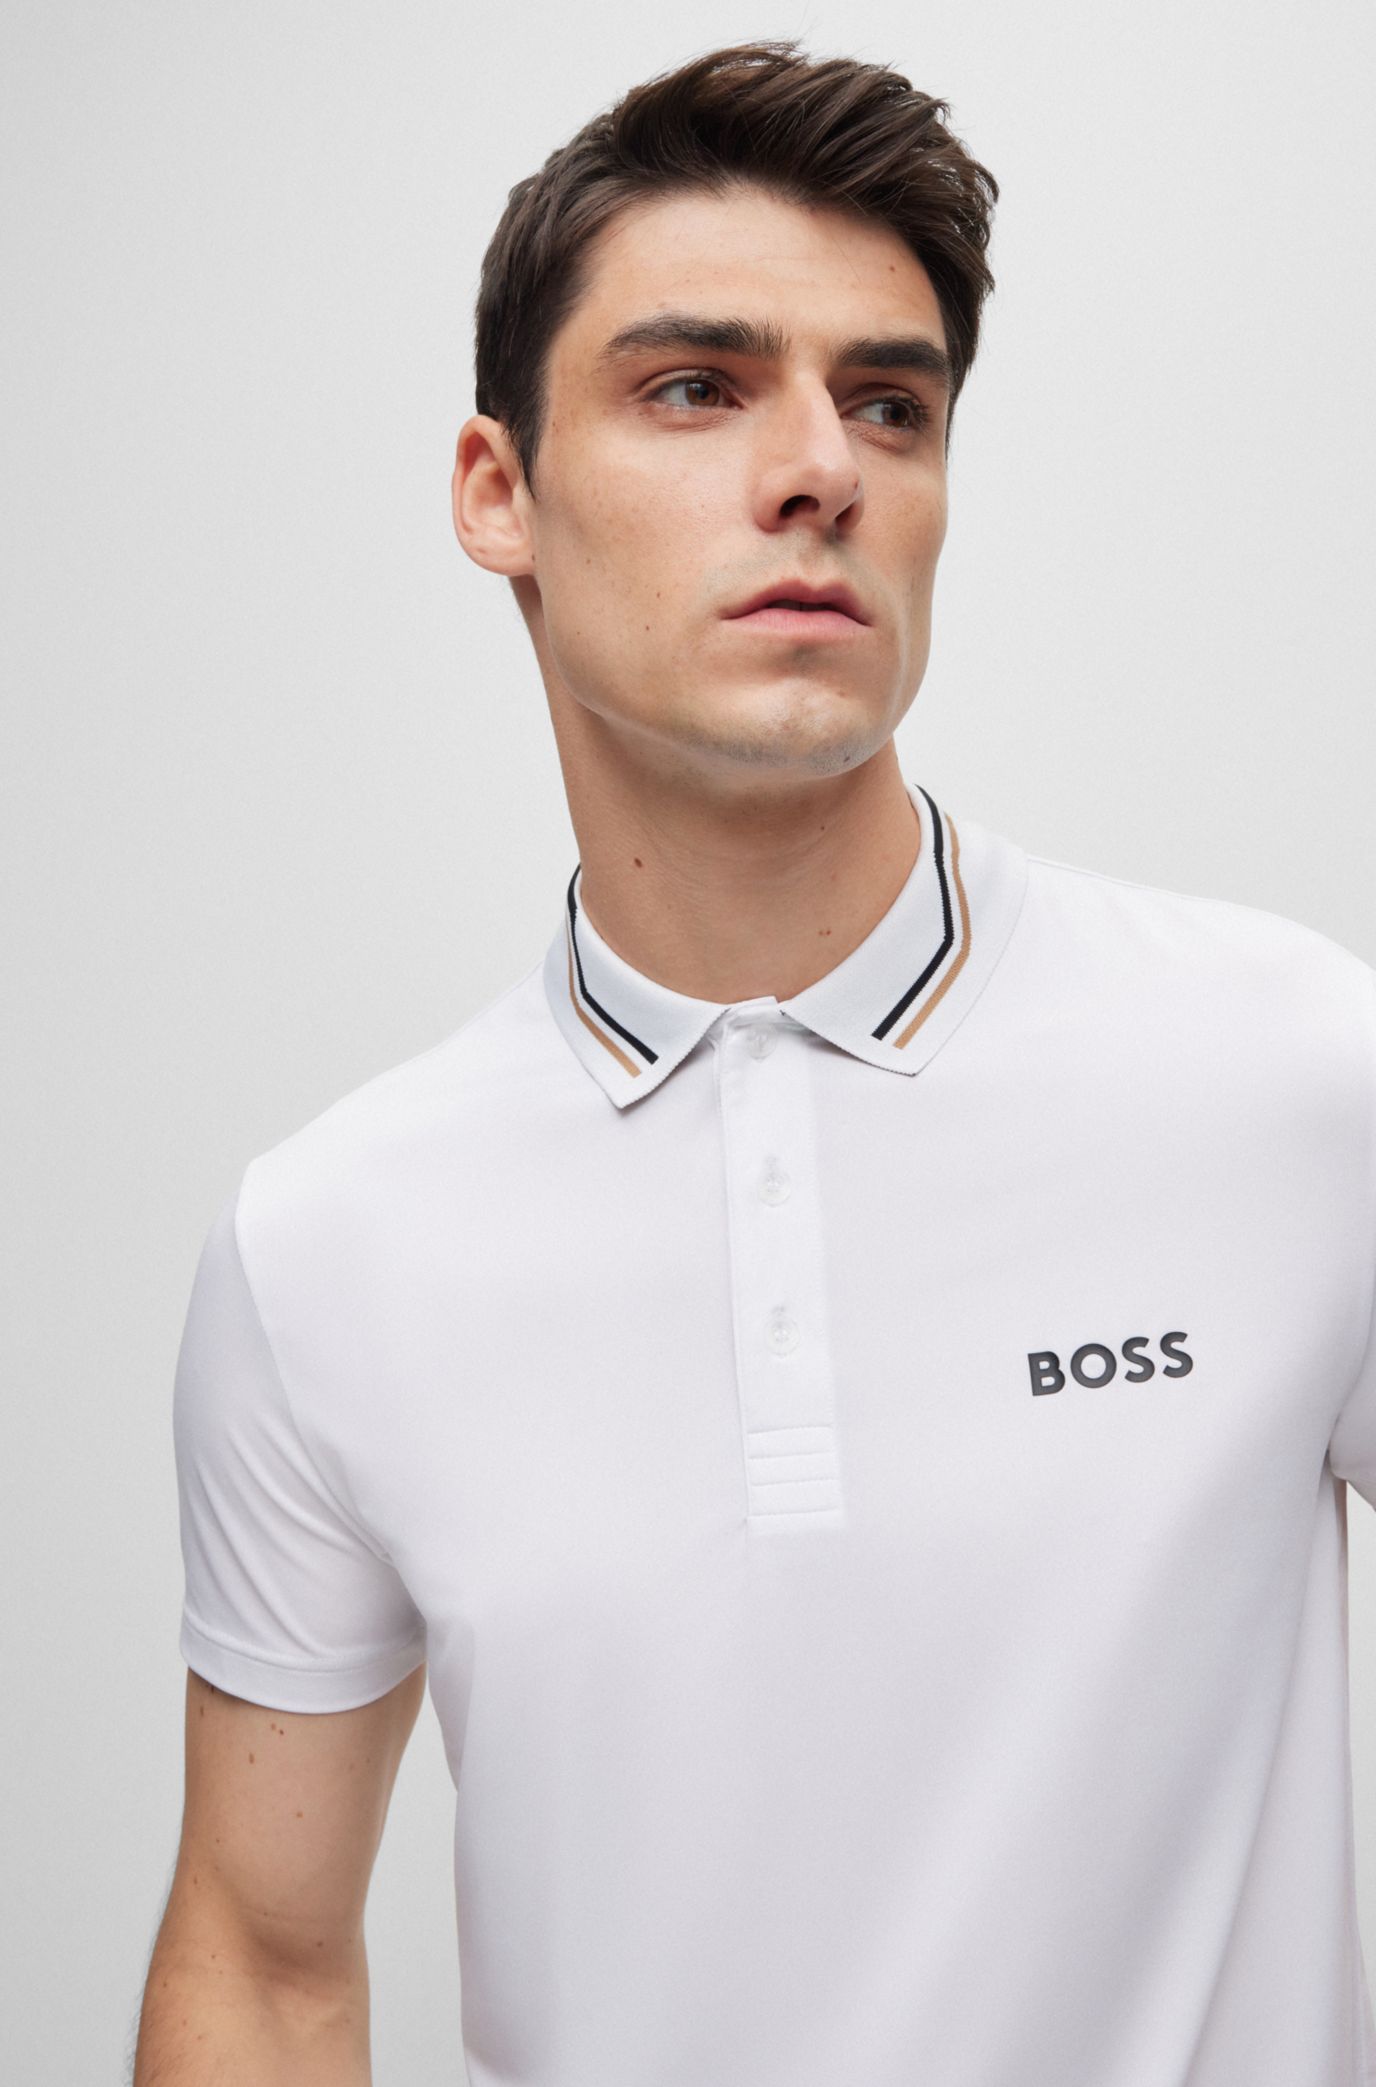 BOSS - Contrast-logo collar shirt polo with stripe